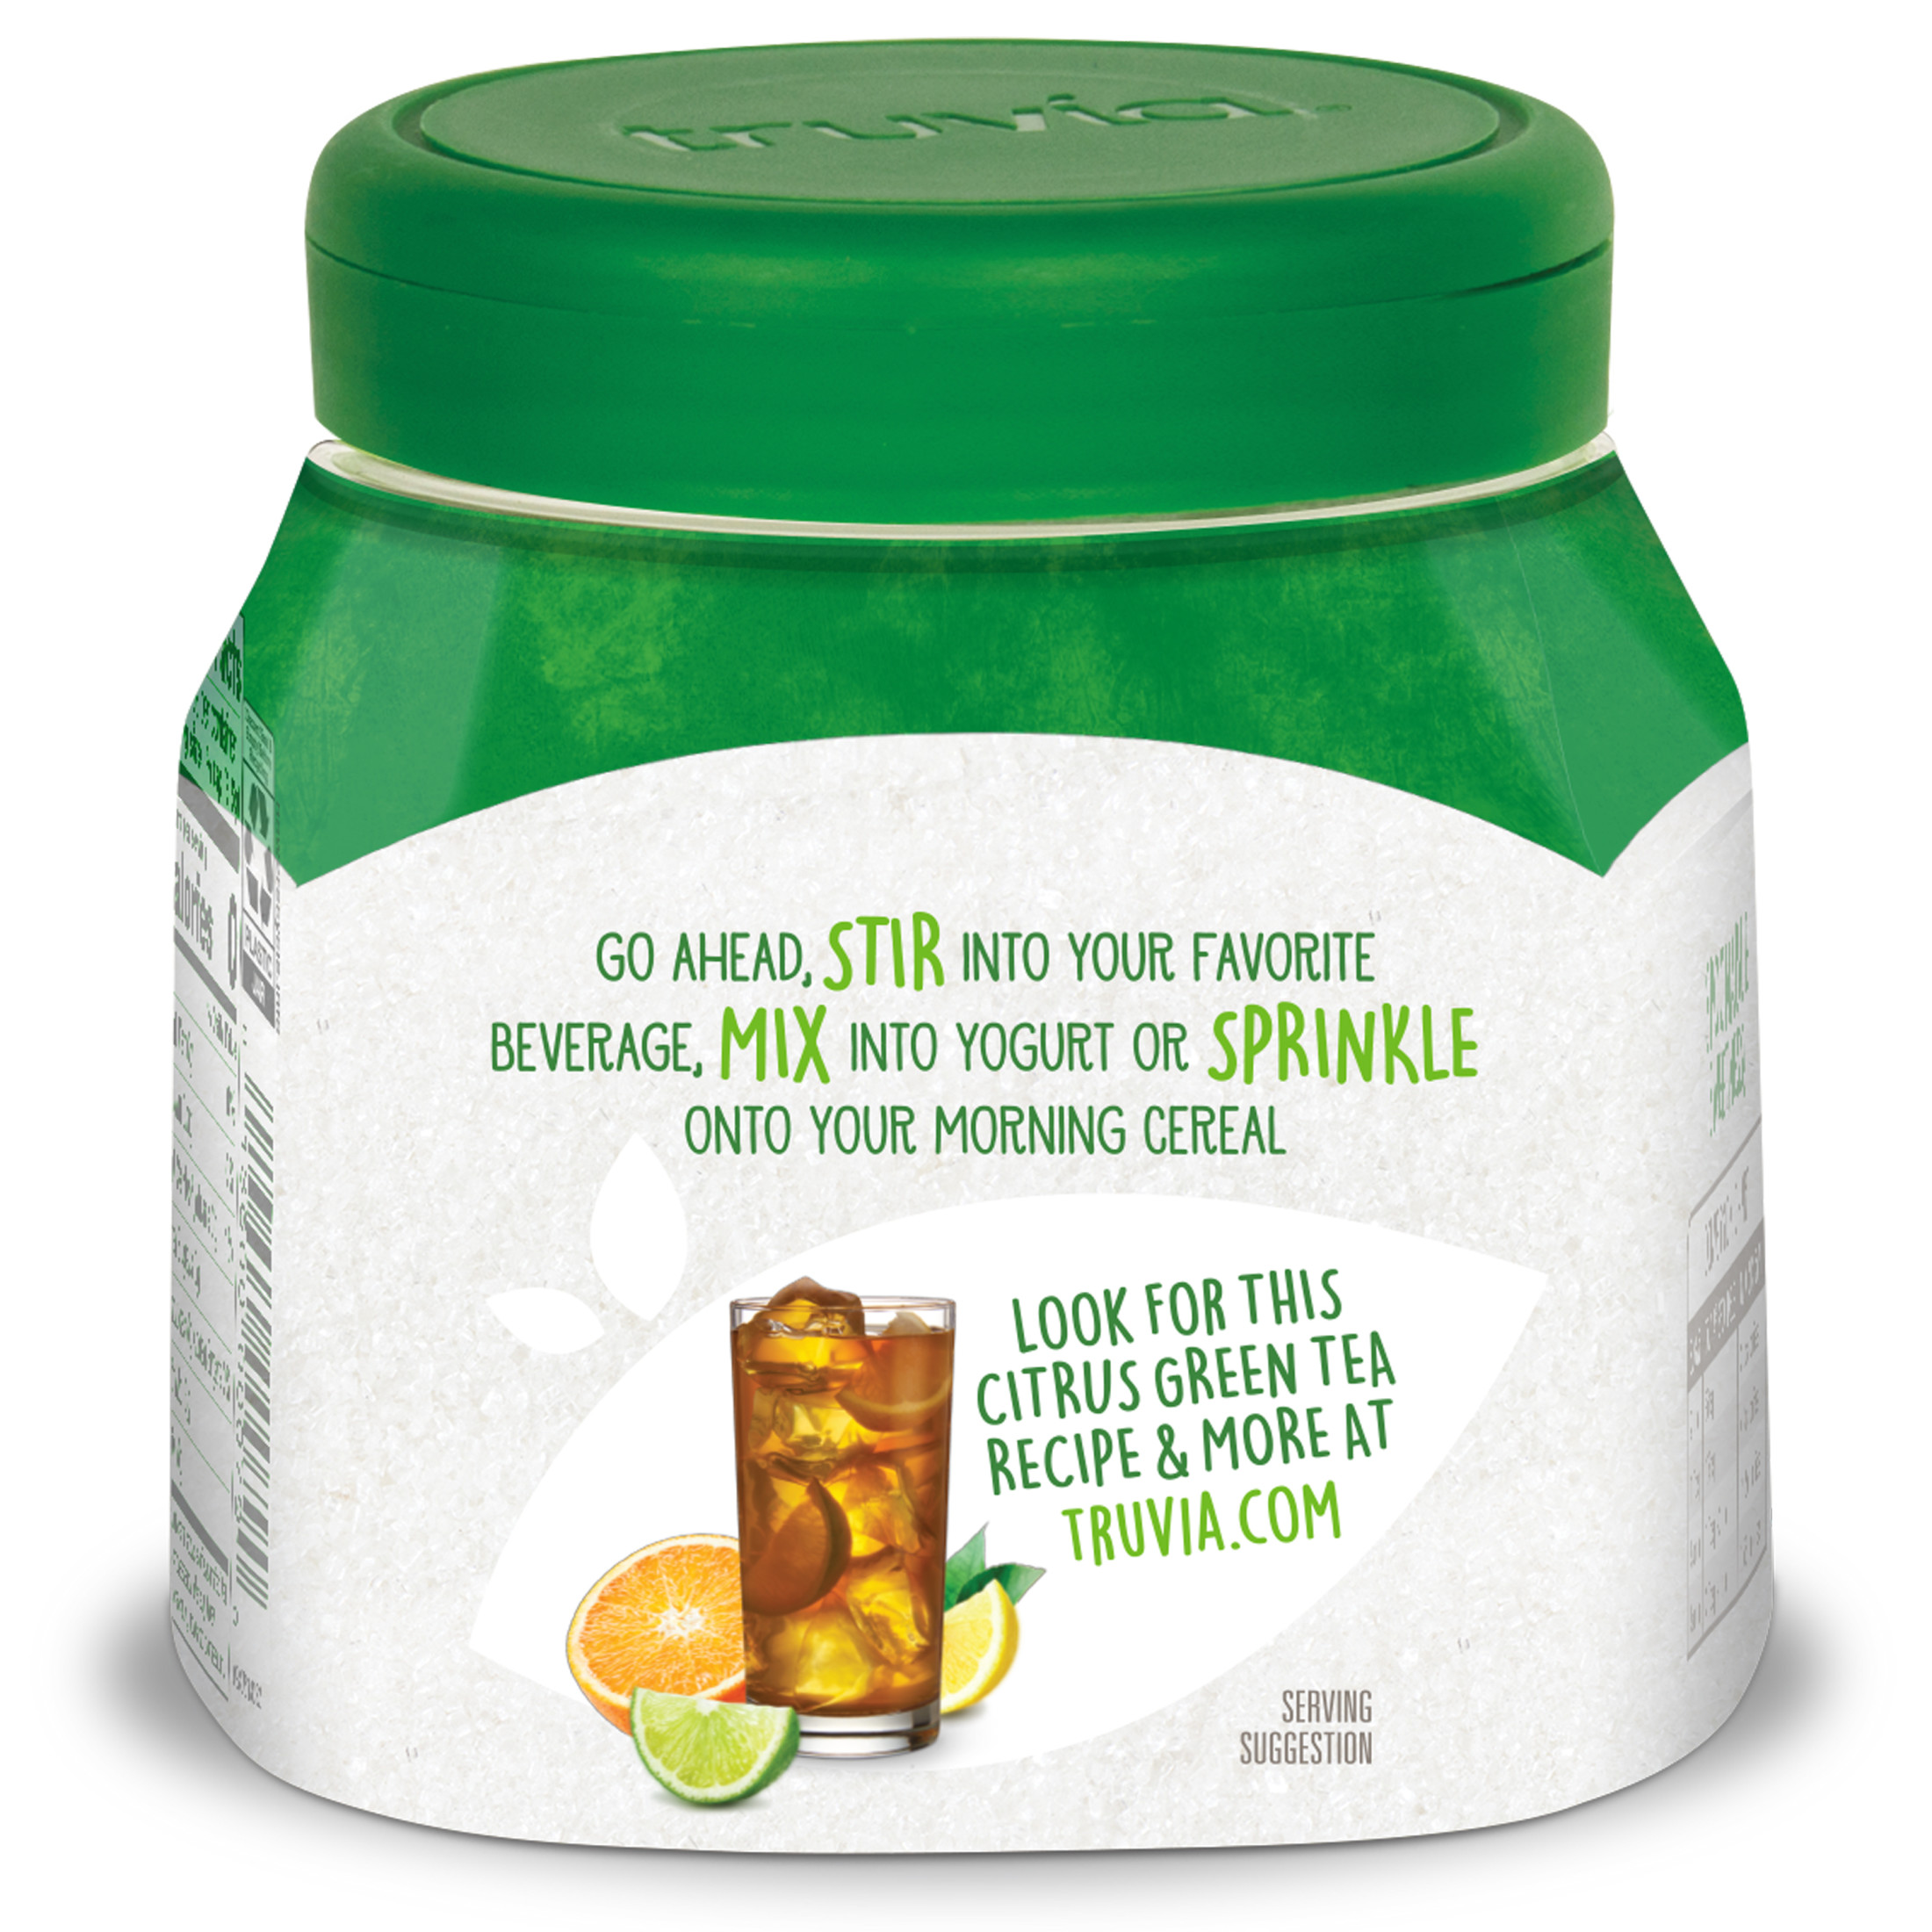 Truvia Calorie-Free Sweetener Jar from the Stevia Leaf (9.8 oz Jar) - image 2 of 7